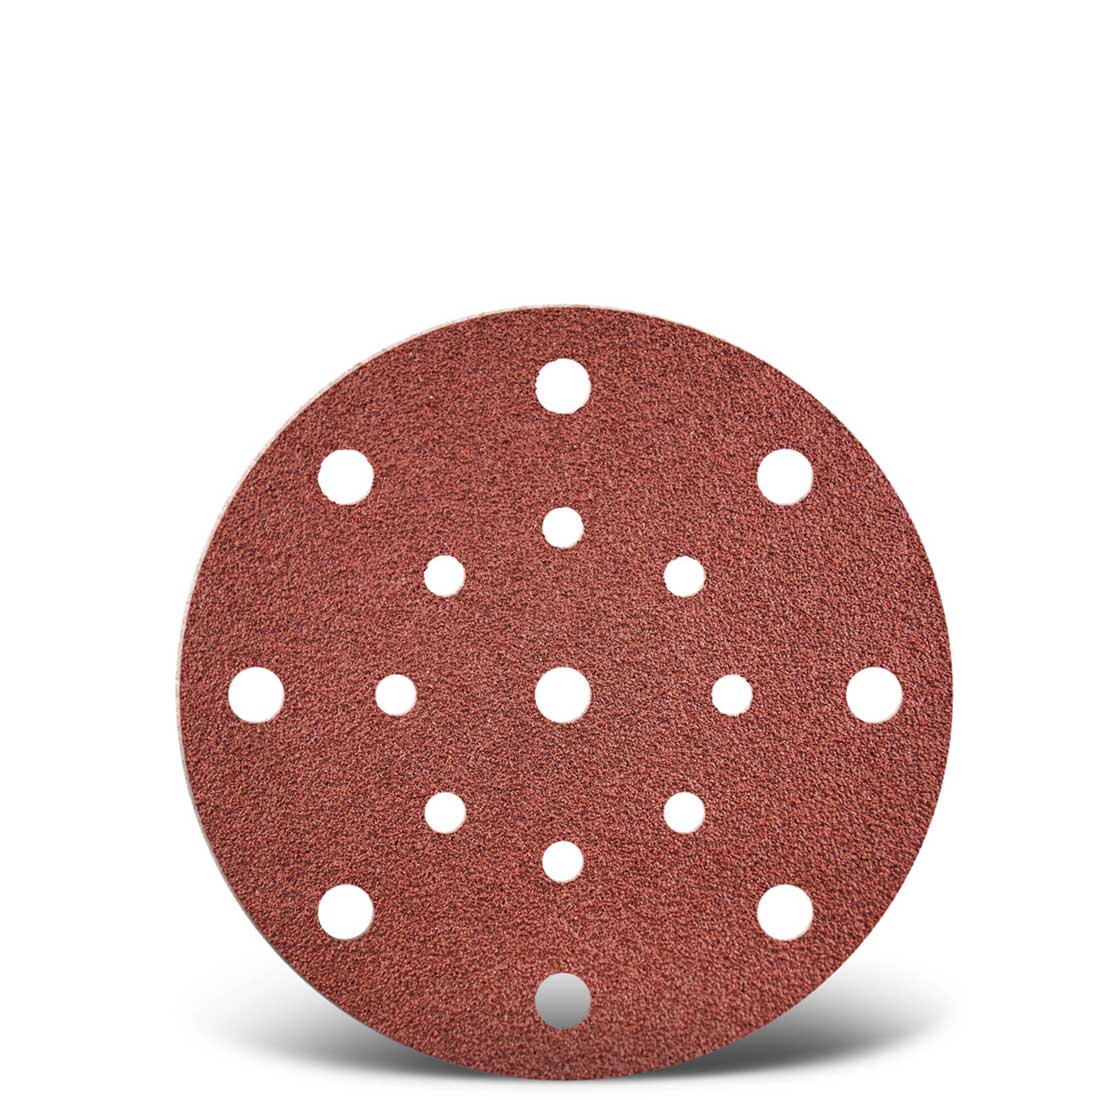 MENZER hook & loop sanding discs for random orbital sanders, G24–240, Ø 150 mm / 17 hole / aluminium oxide